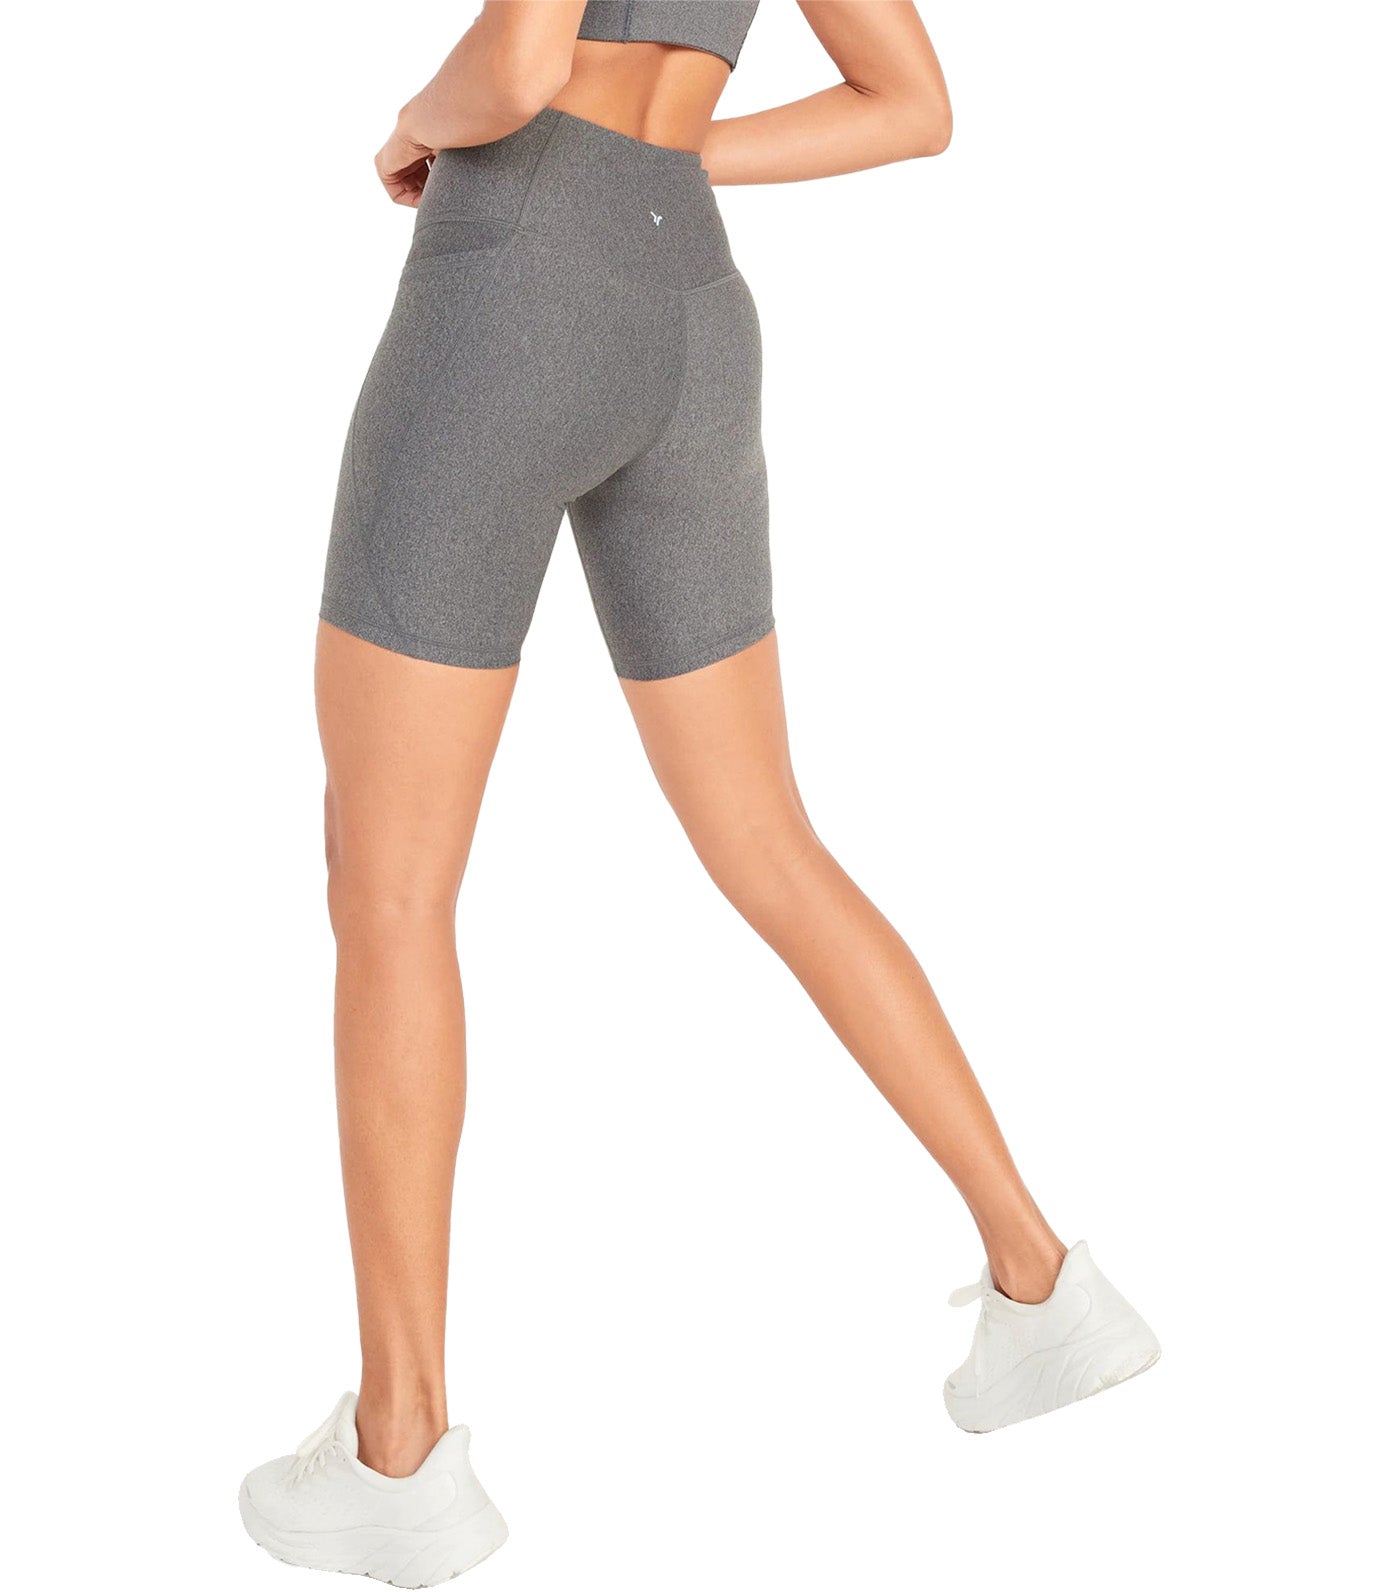 High-Waisted PowerSoft Side-Pocket Biker Shorts for Women 8-inch Inseam Heather Gray